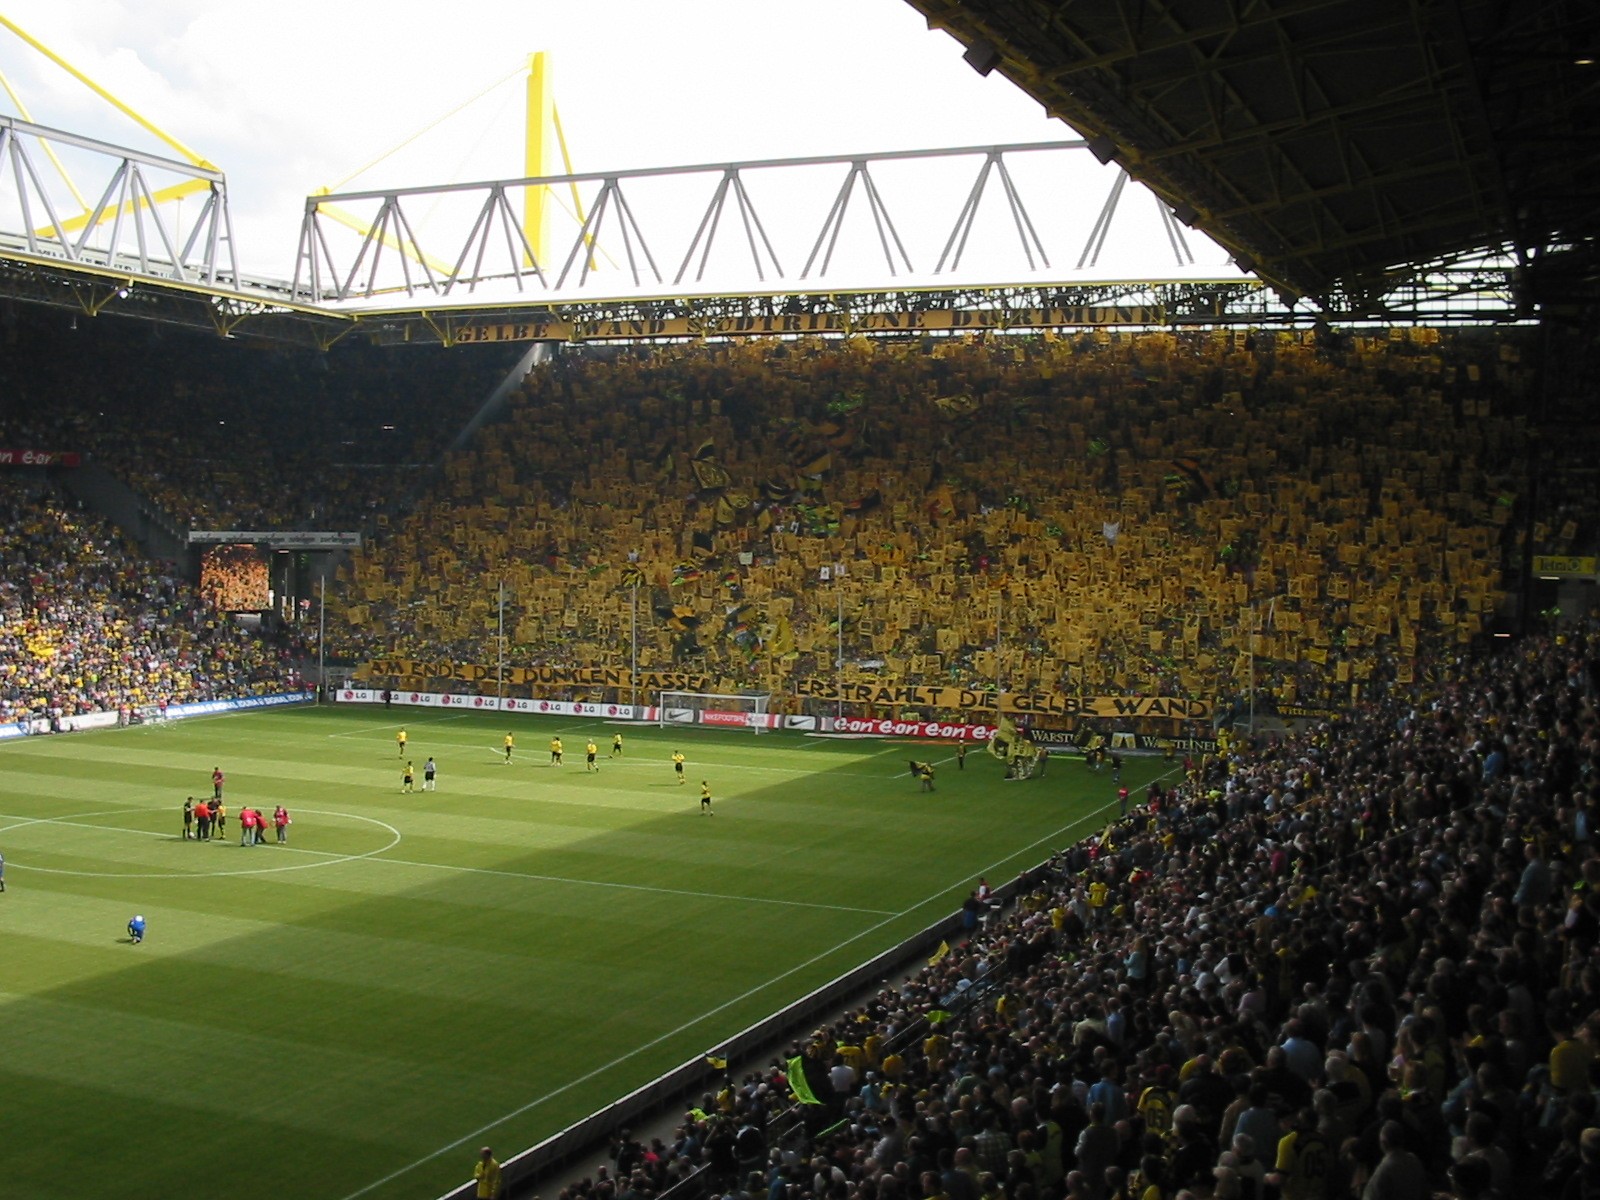  BV Borussia Dortmund بوروسيا دورتموند ألمانيا User.aspx?id=43864&f=bvb8